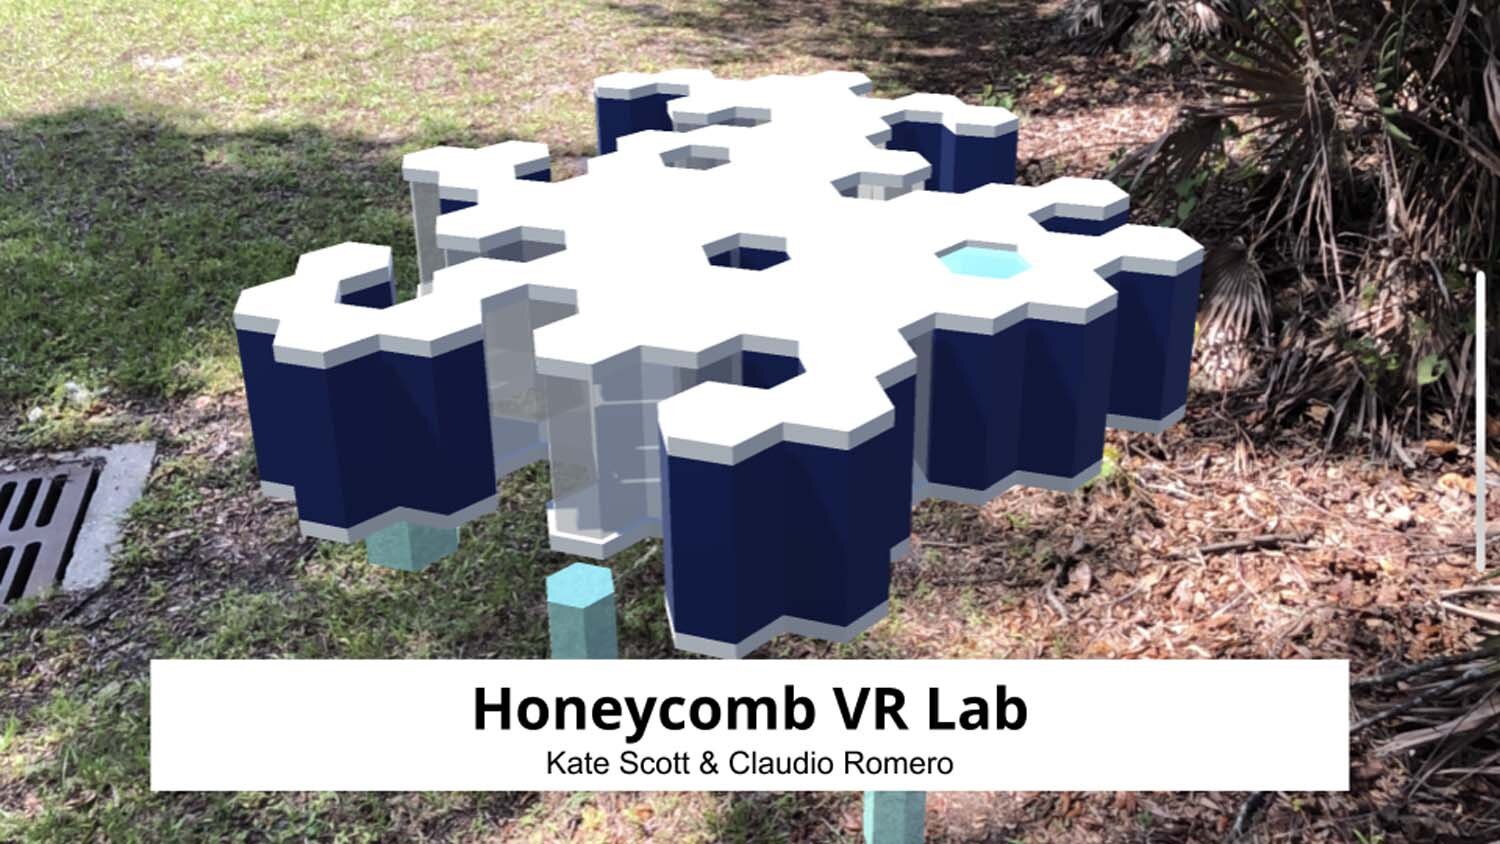 001-Honeycomb_VR_Lab-4_kstijd.jpg